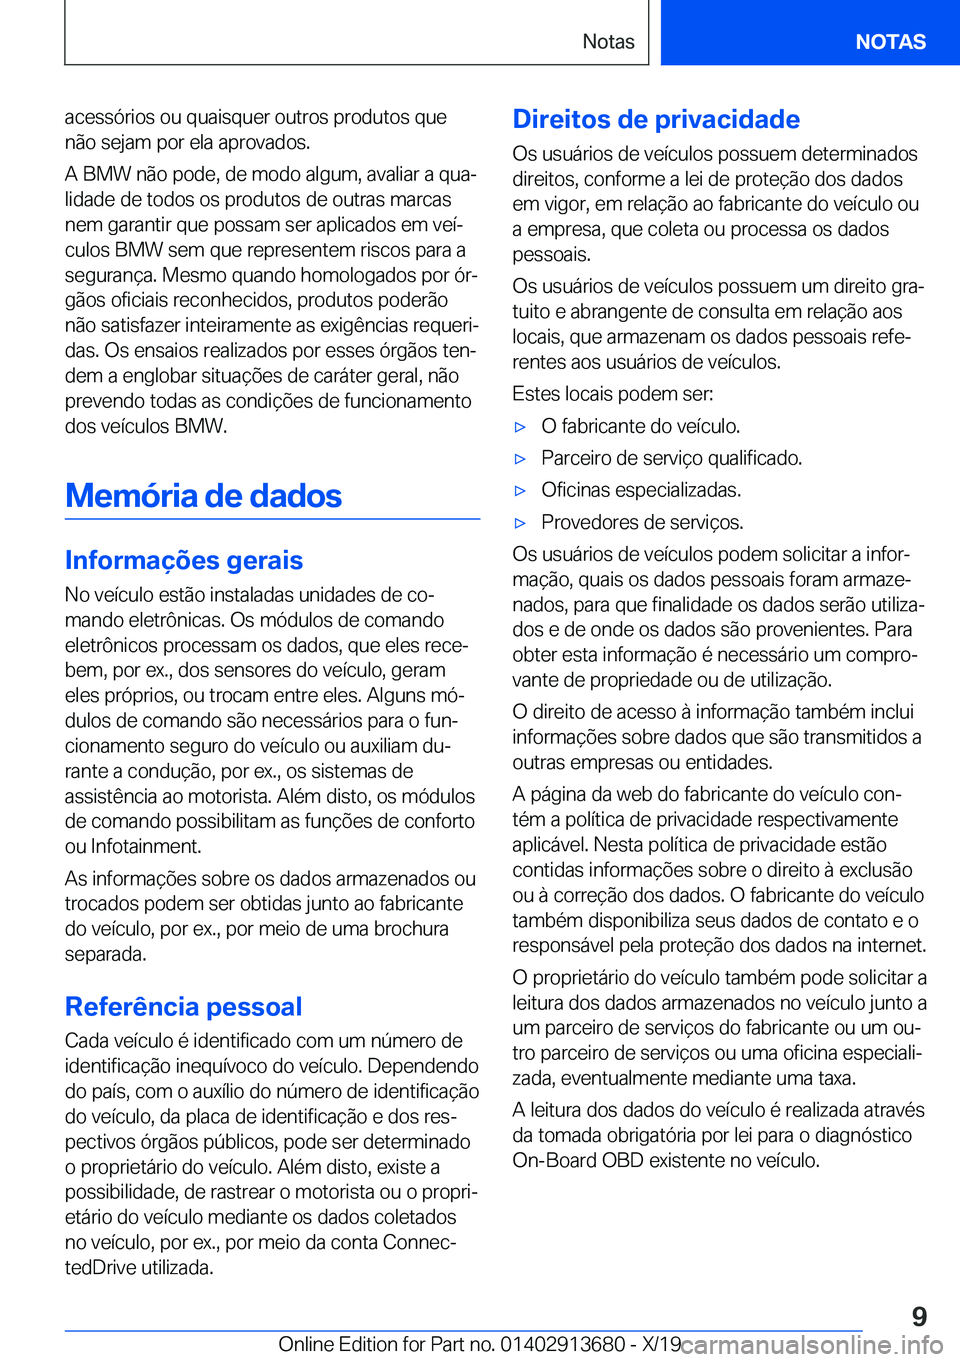 BMW X5 2020  Manual do condutor (in Portuguese) �a�c�e�s�s�ó�r�i�o�s��o�u��q�u�a�i�s�q�u�e�r��o�u�t�r�o�s��p�r�o�d�u�t�o�s��q�u�e
�n�ã�o��s�e�j�a�m��p�o�r��e�l�a��a�p�r�o�v�a�d�o�s�.
�A��B�M�W��n�ã�o��p�o�d�e�,��d�e��m�o�d�o��a�l�